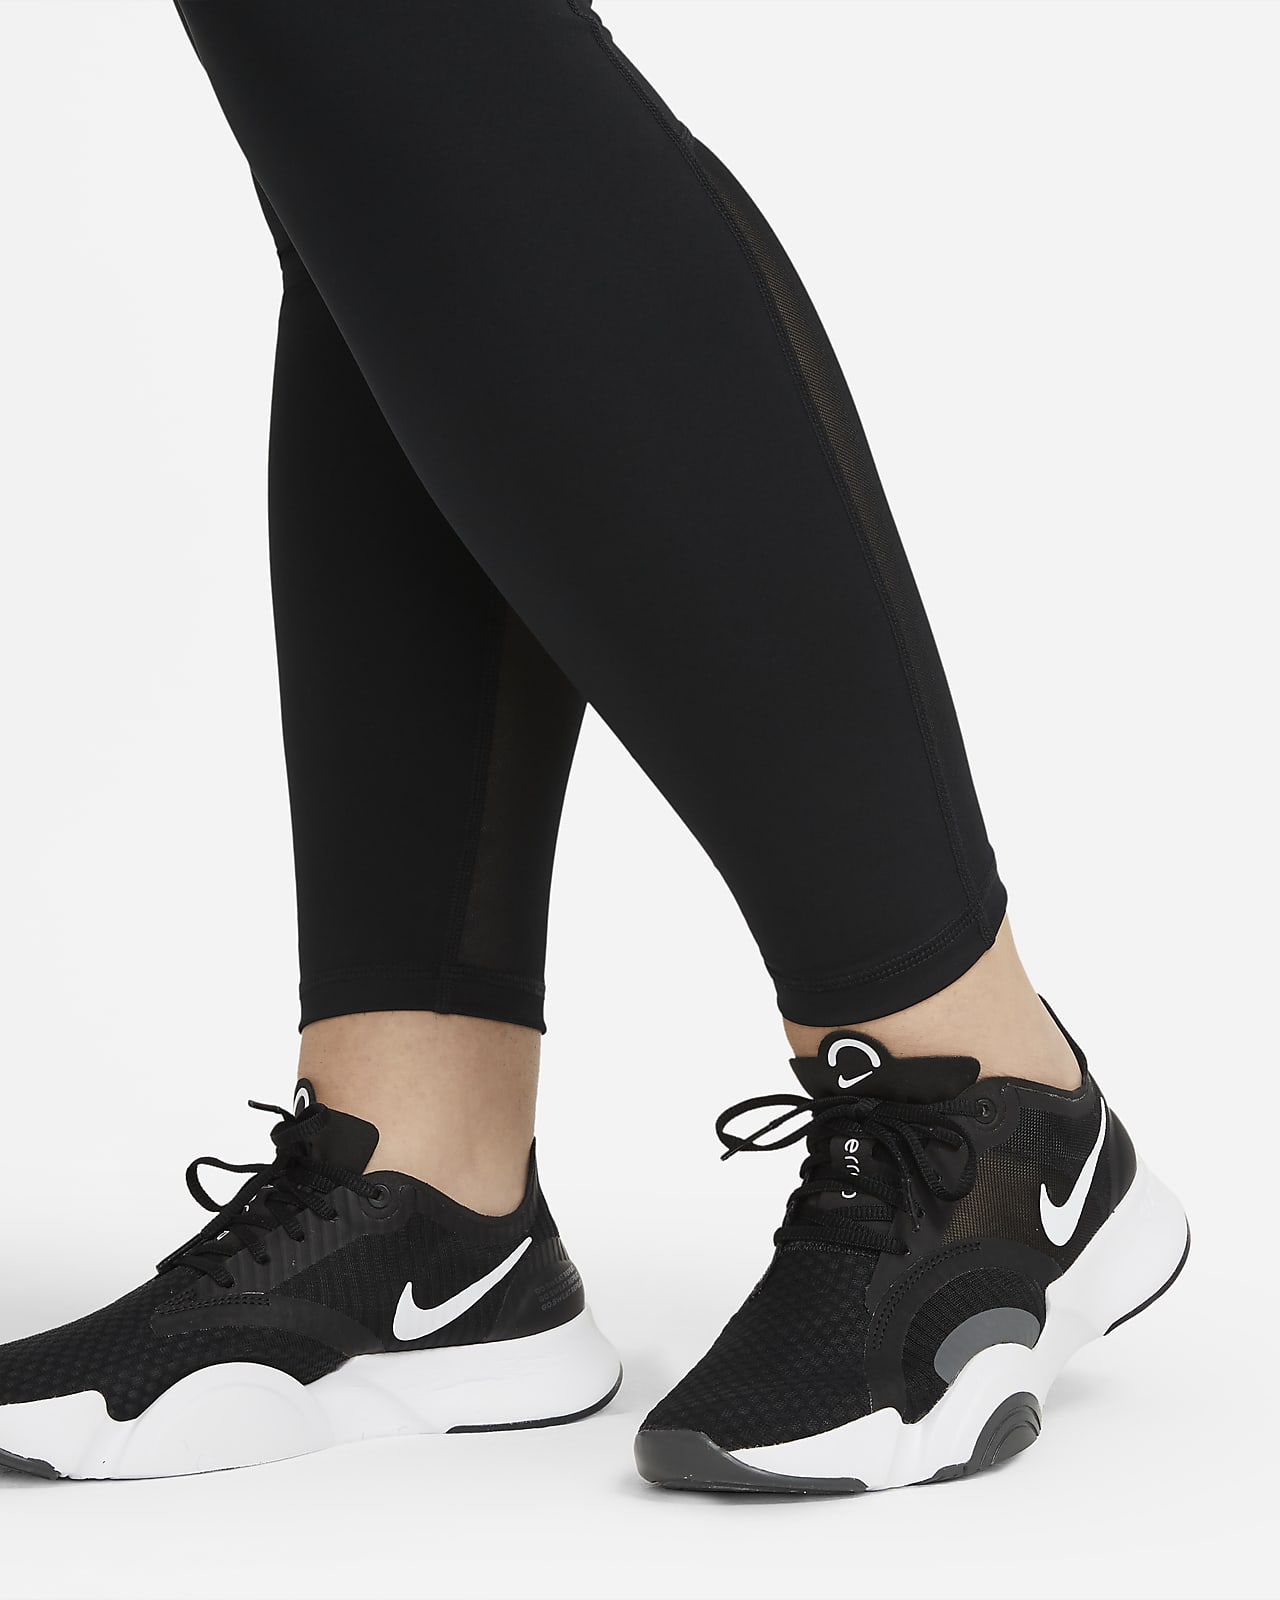 NEW Nike [XXL] Women's Pro 365 Training/Yoga Leggings-Black/White  CZ9779-010